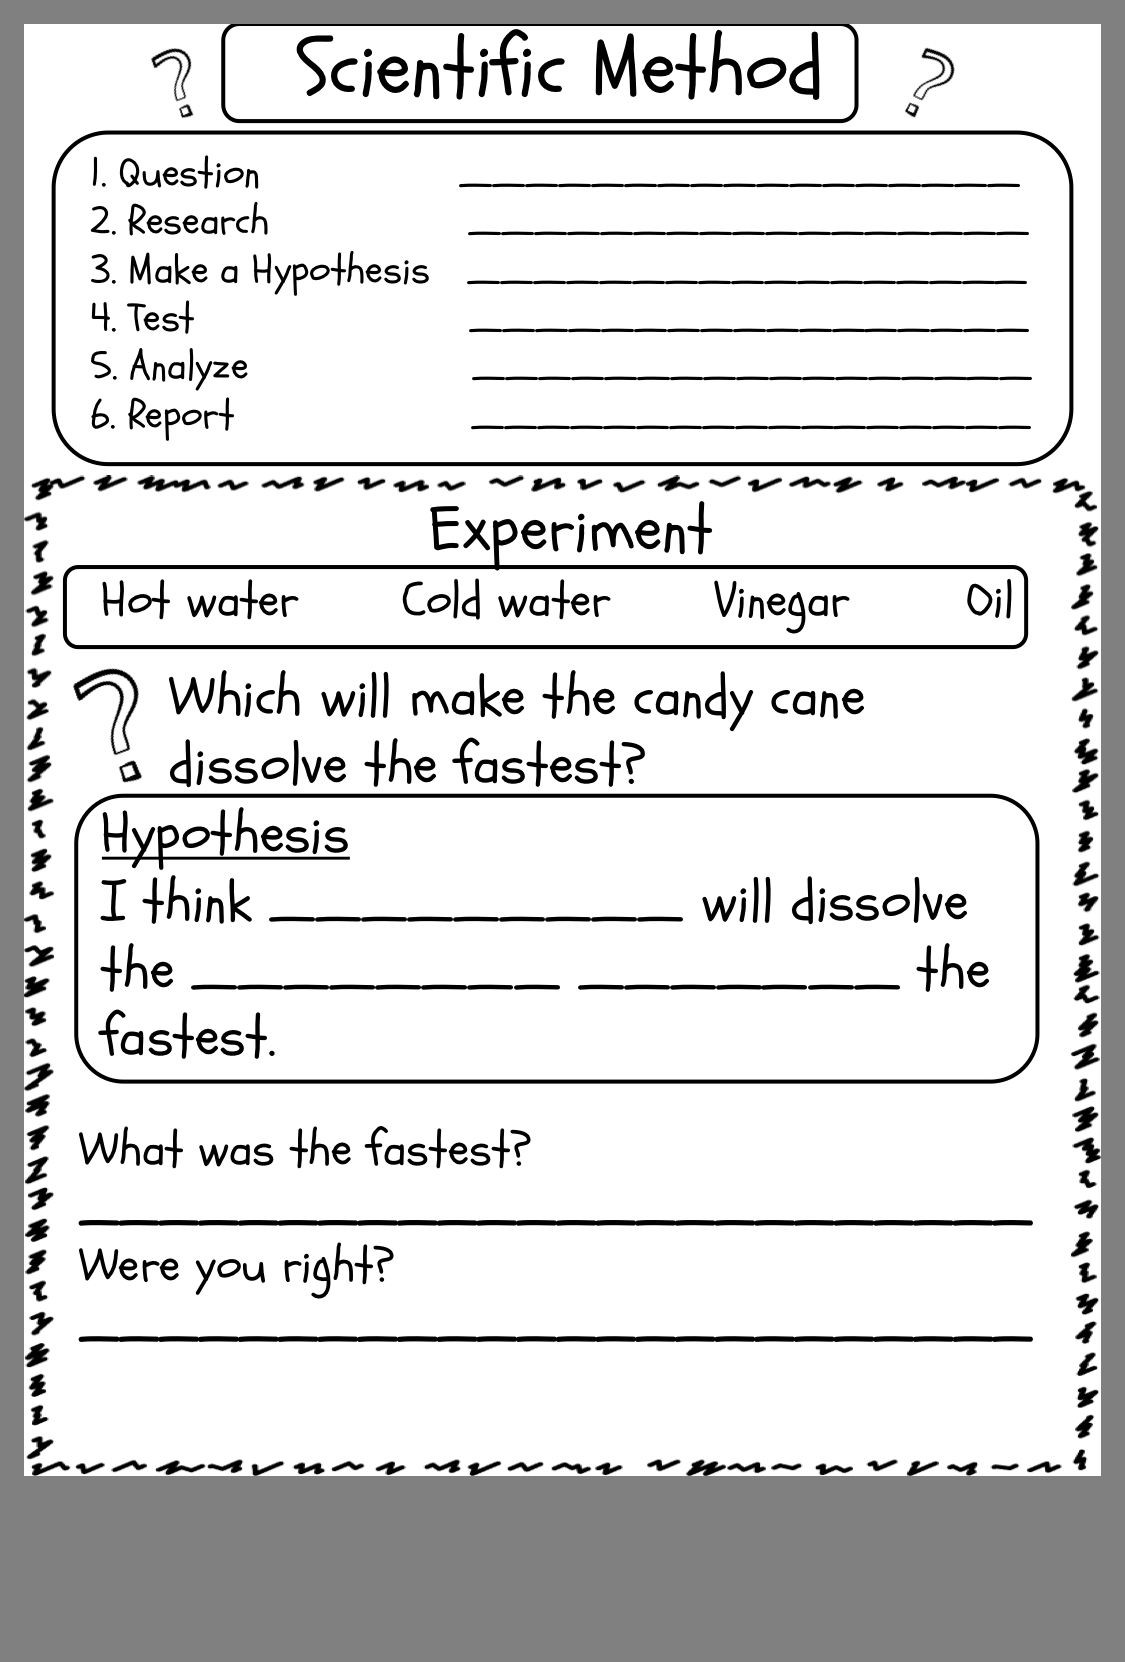 Scientific Method Worksheet 4th Grade Scientific Method Experiment Worksheet